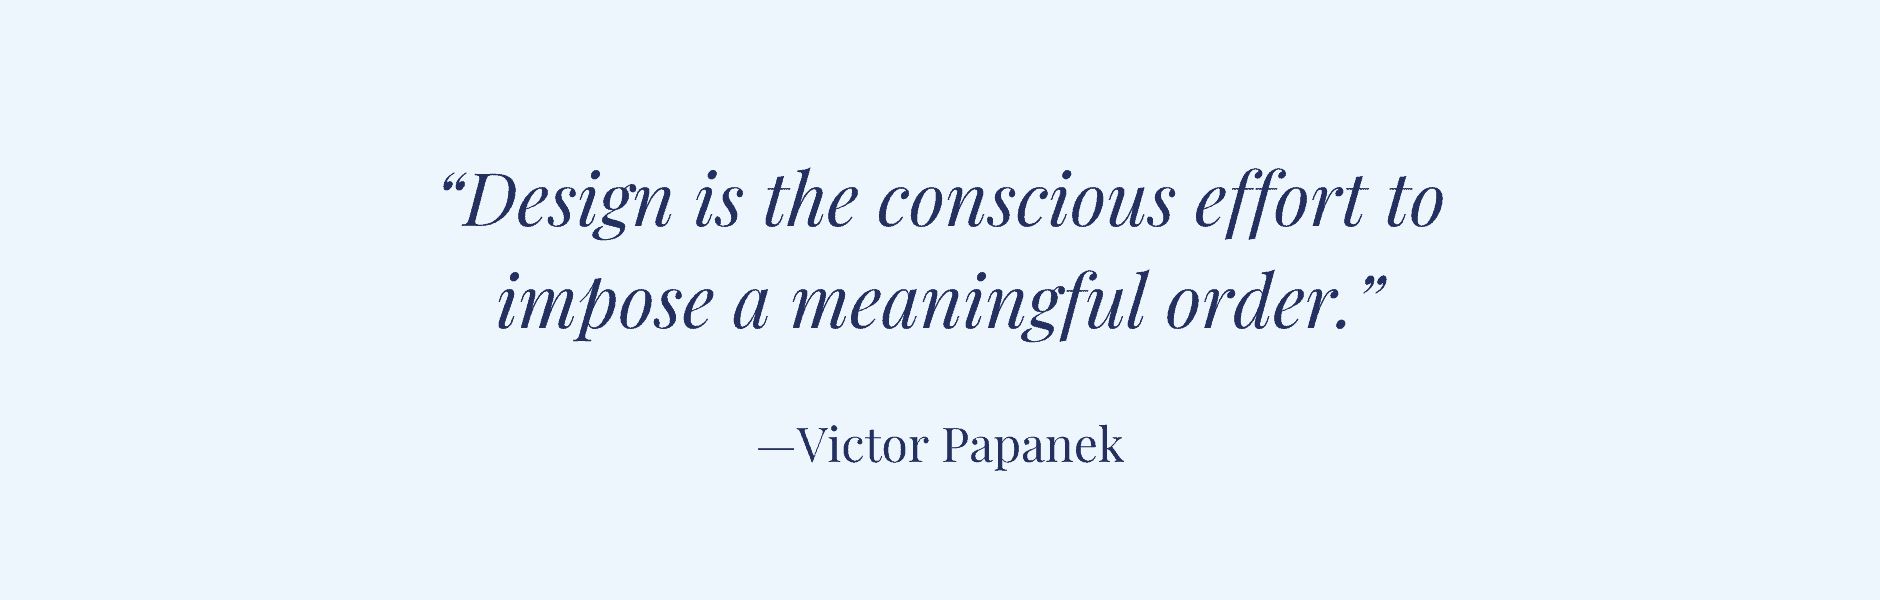 Victor Papanek Design Quote